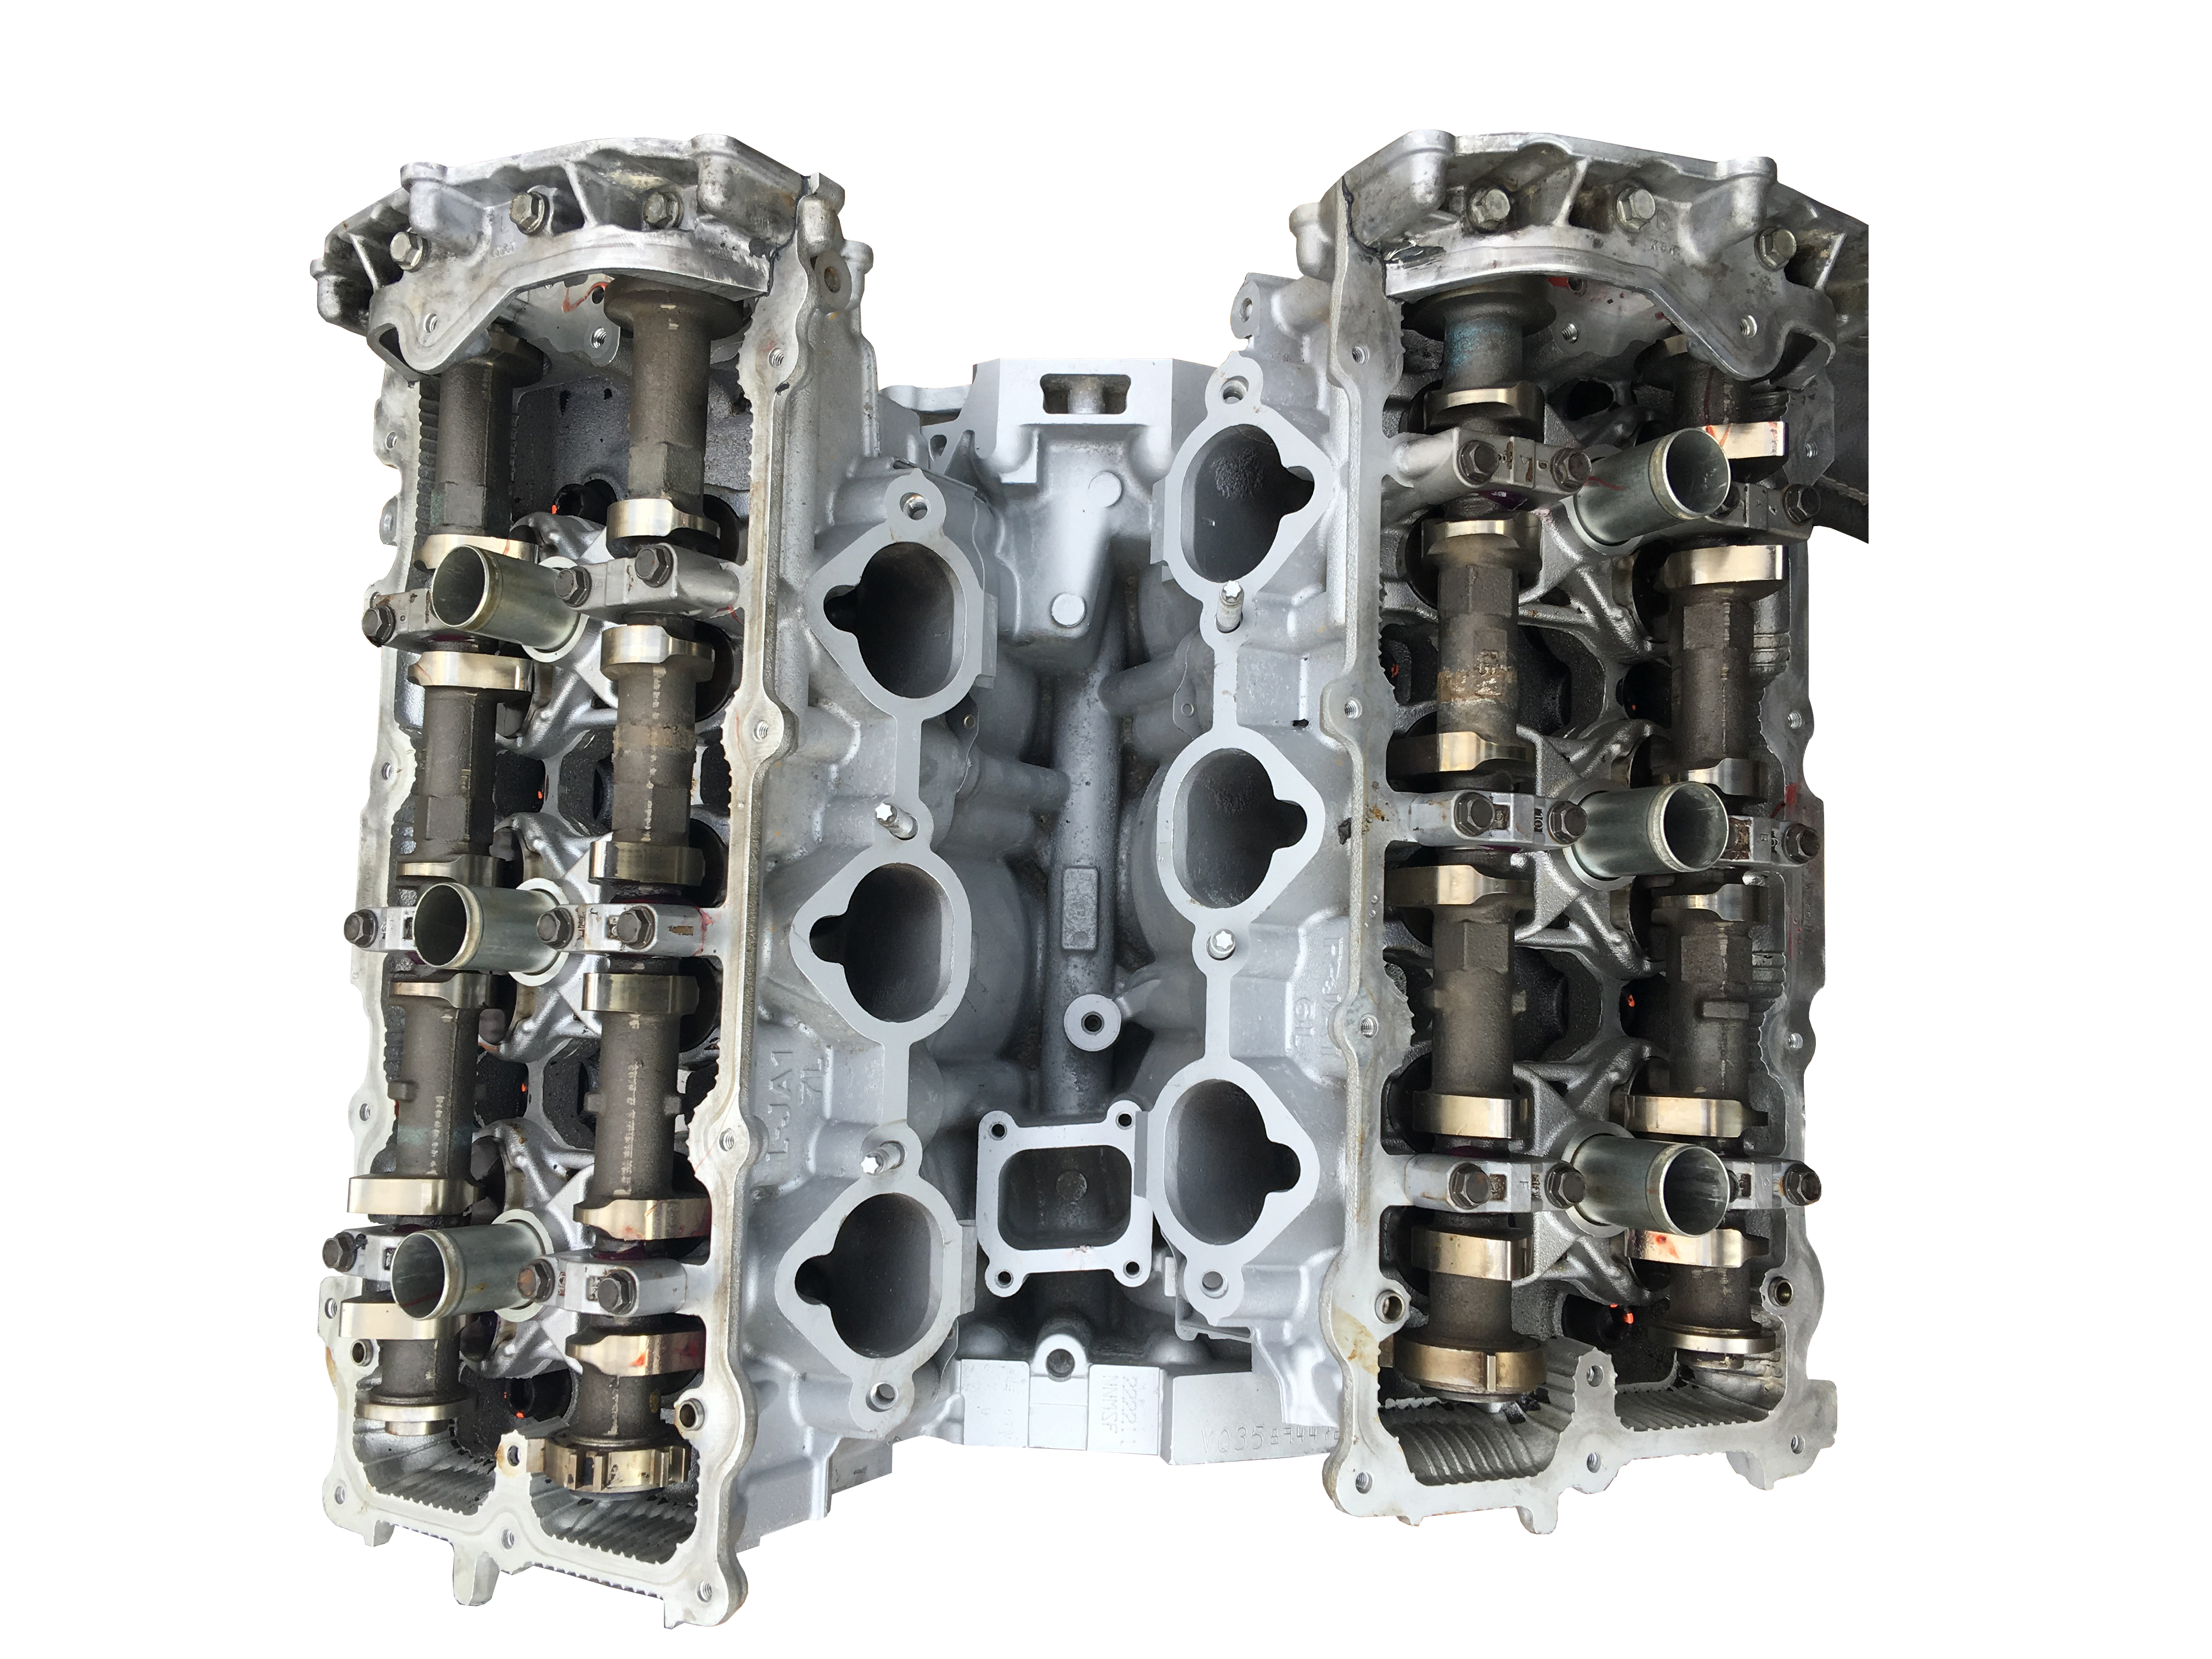 Infiniti VQ35HR rebuilt engine